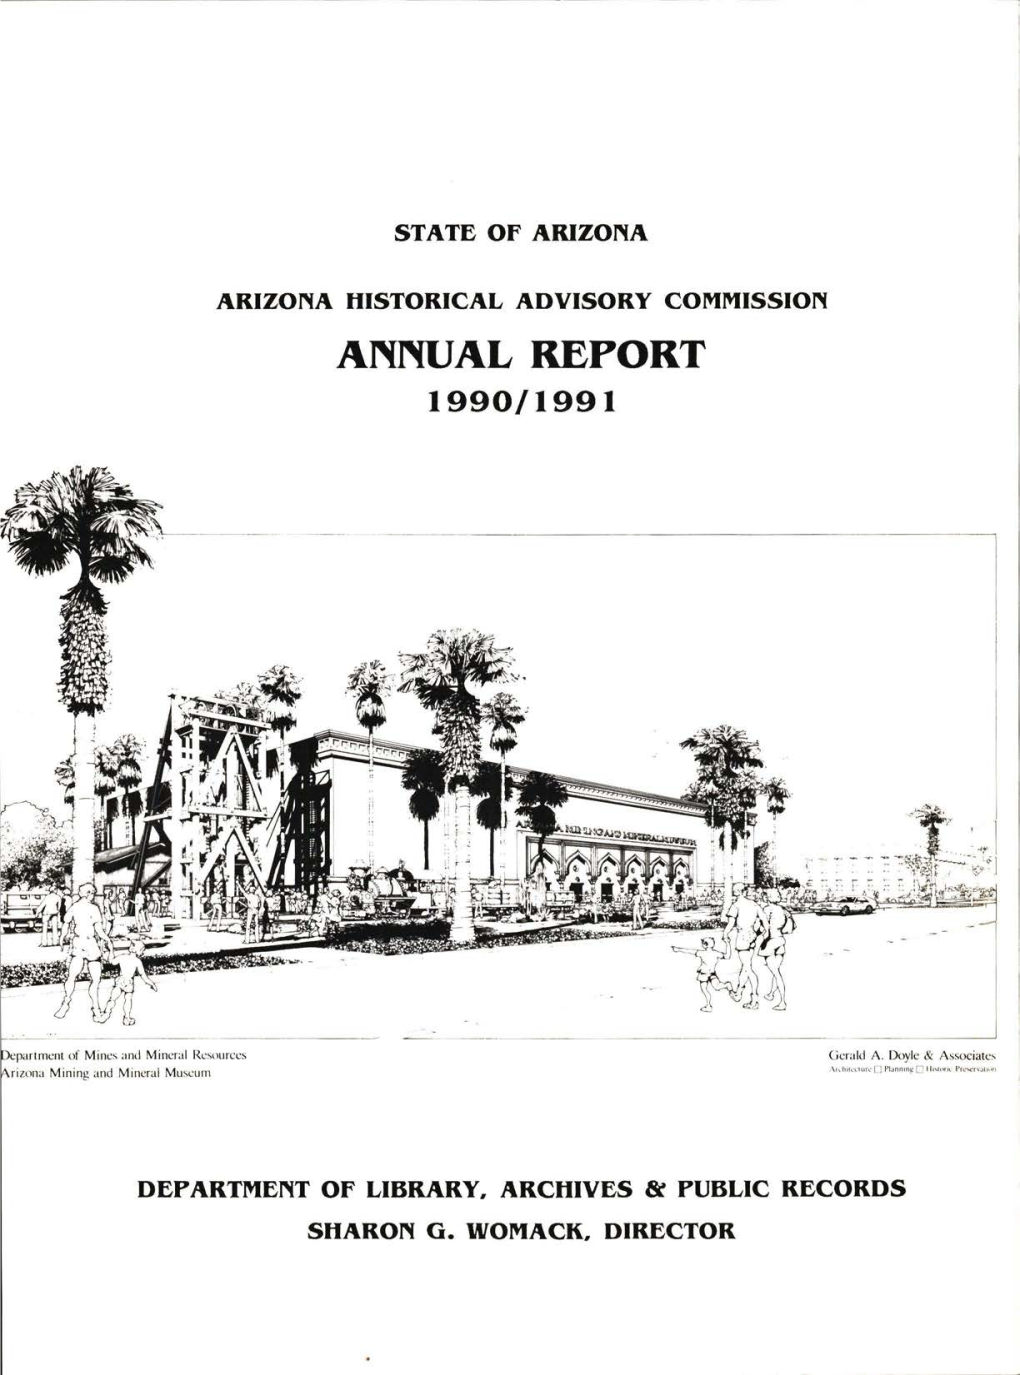 Annual Report 1990/1991